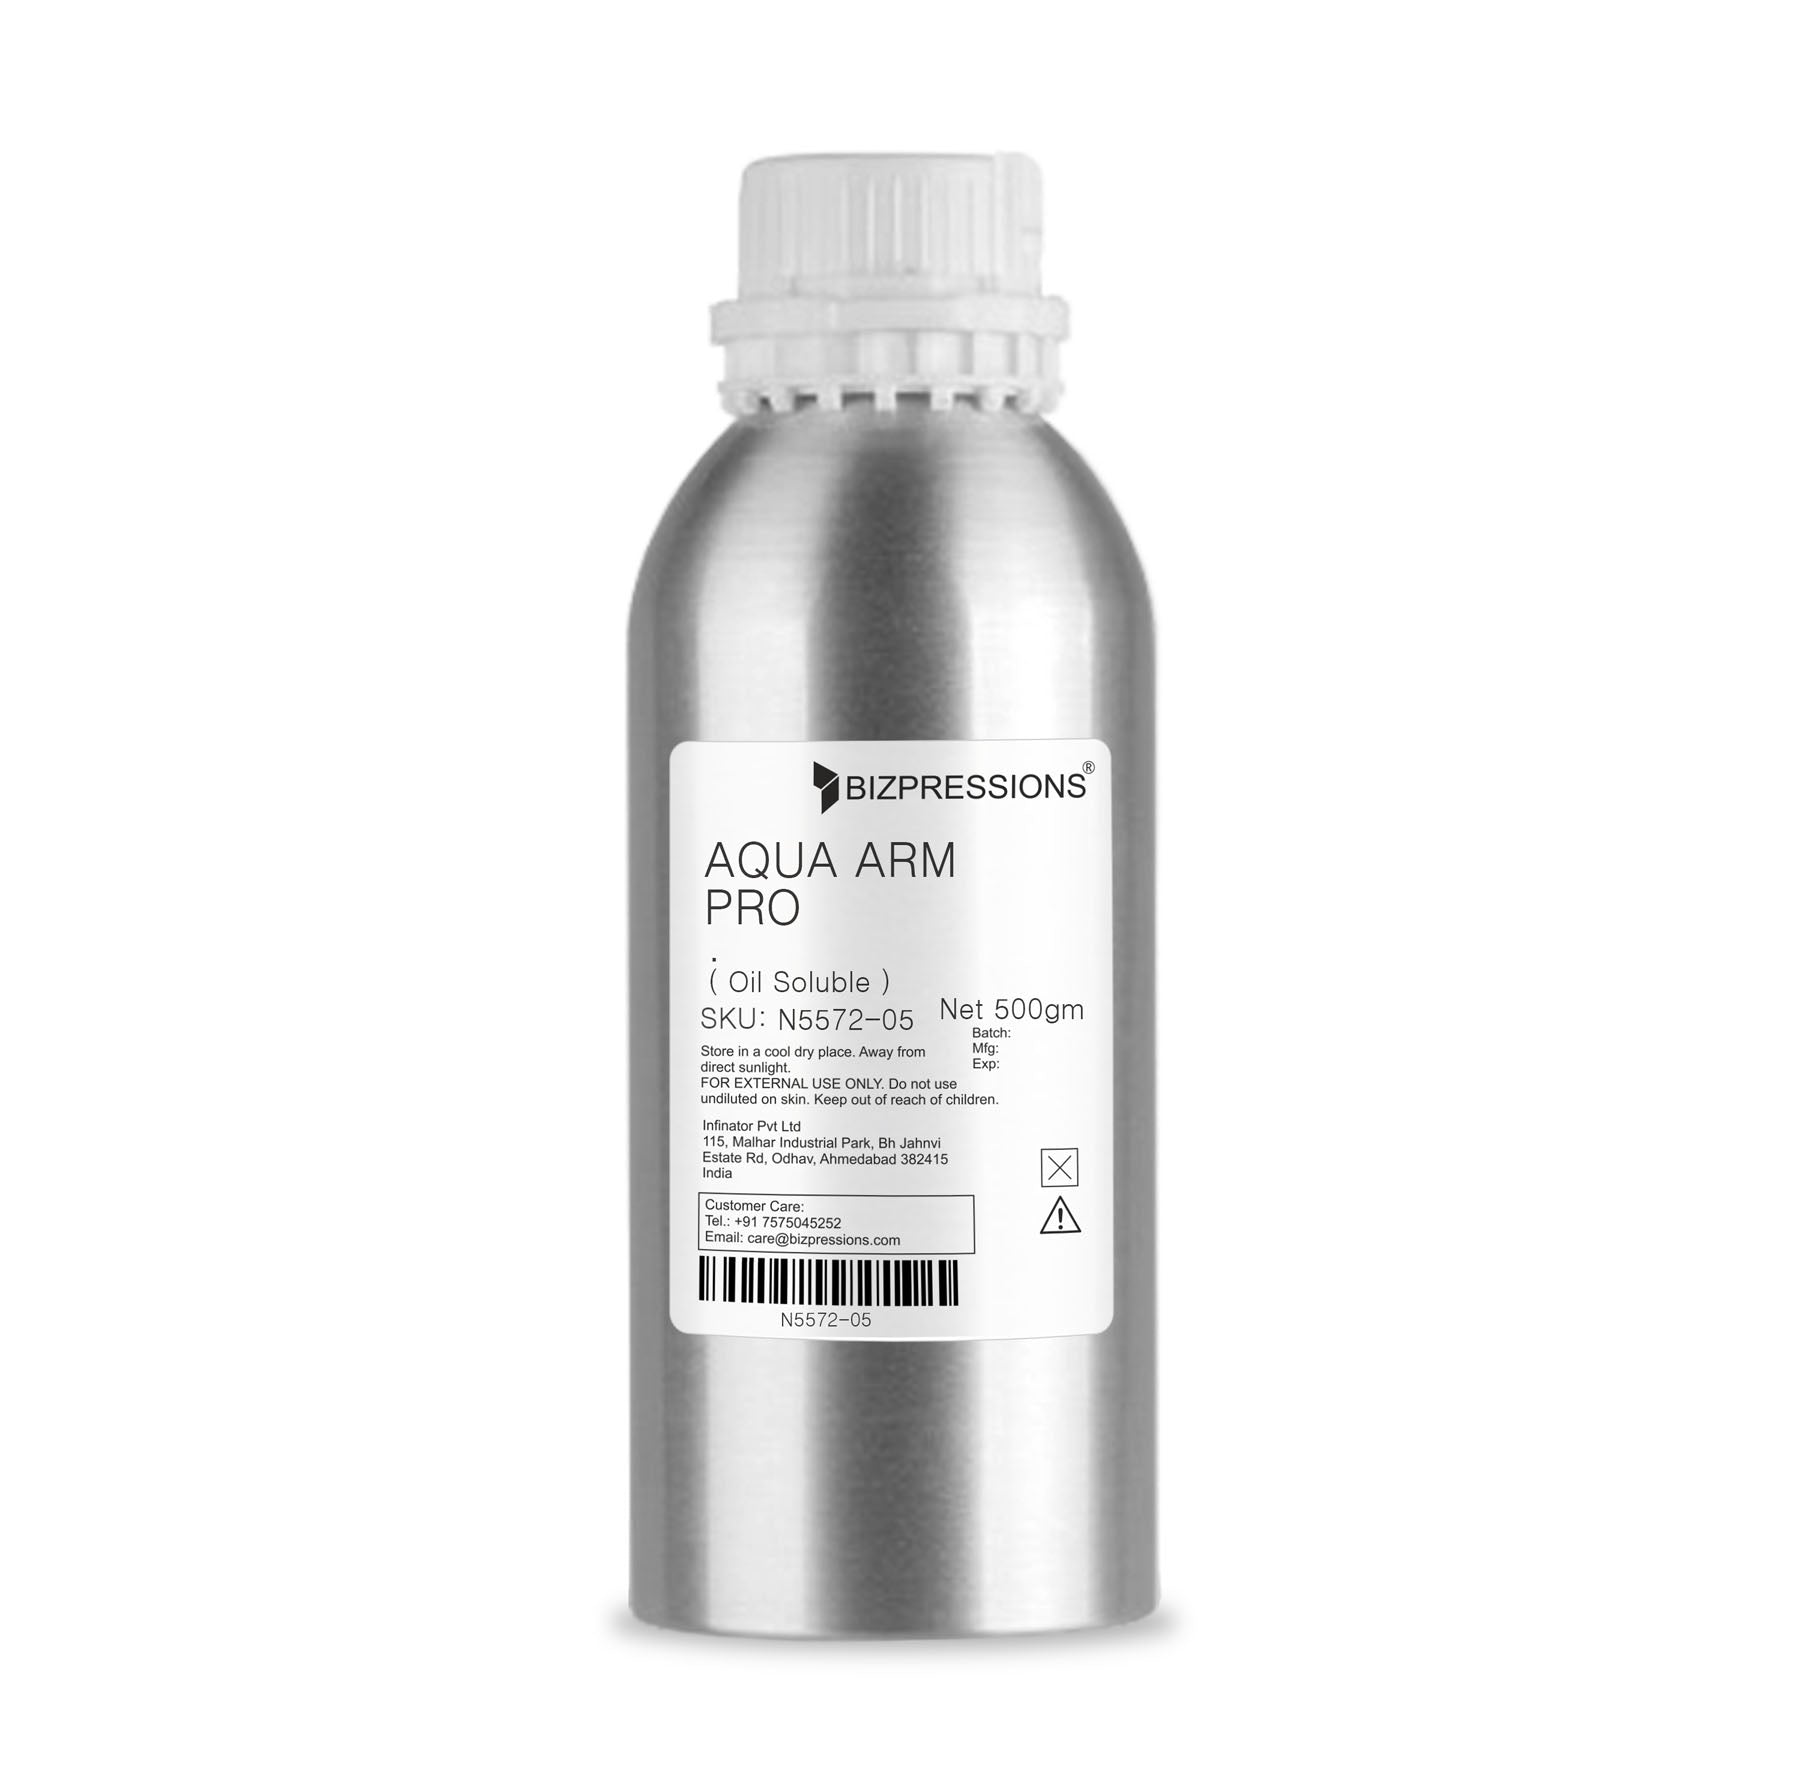 AQUA ARM PRO - Fragrance ( Oil Soluble ) - 500 gm